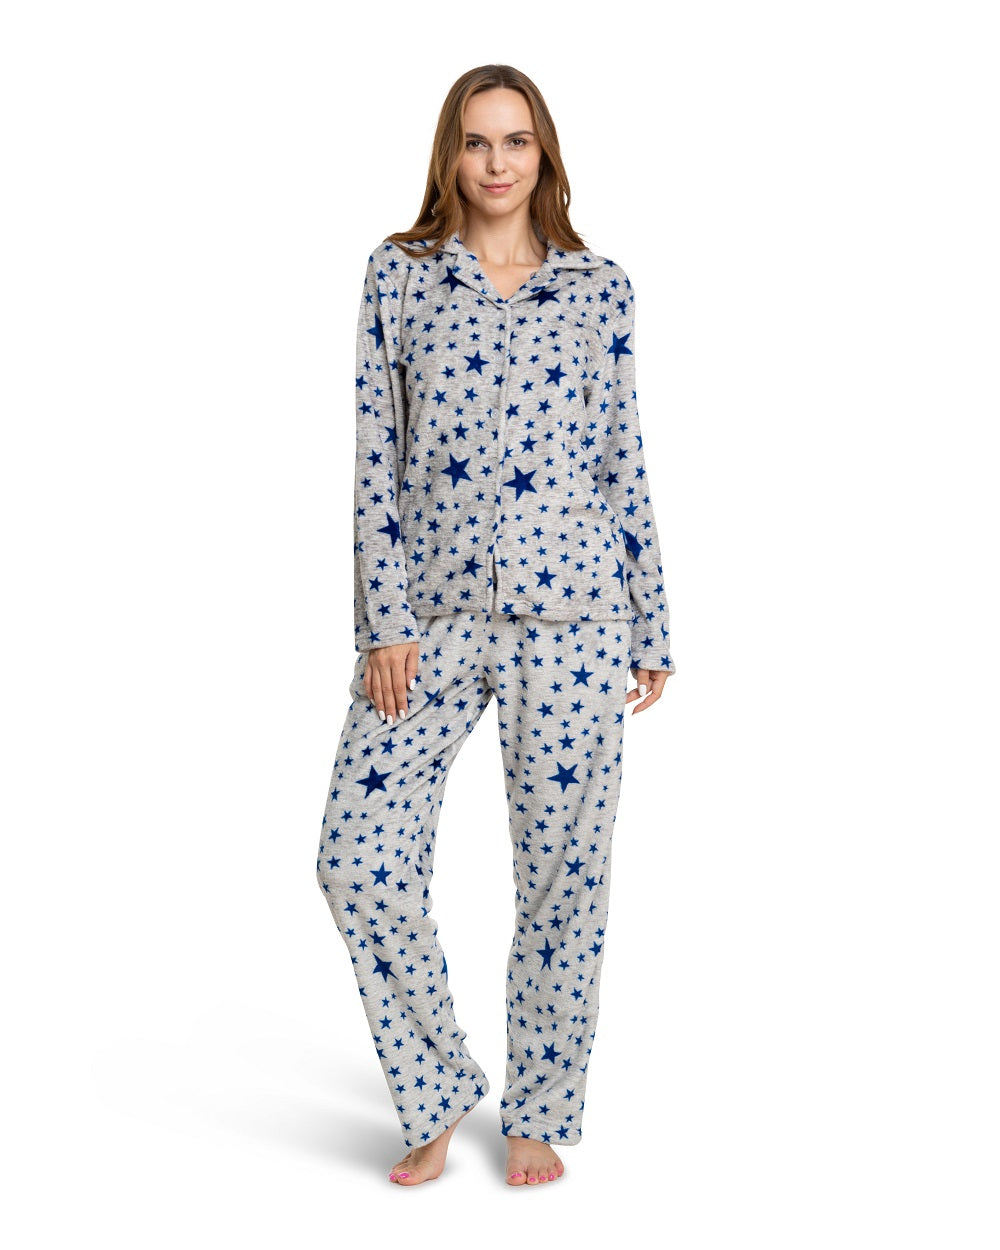 Women's Fleece Print Pajama Sets